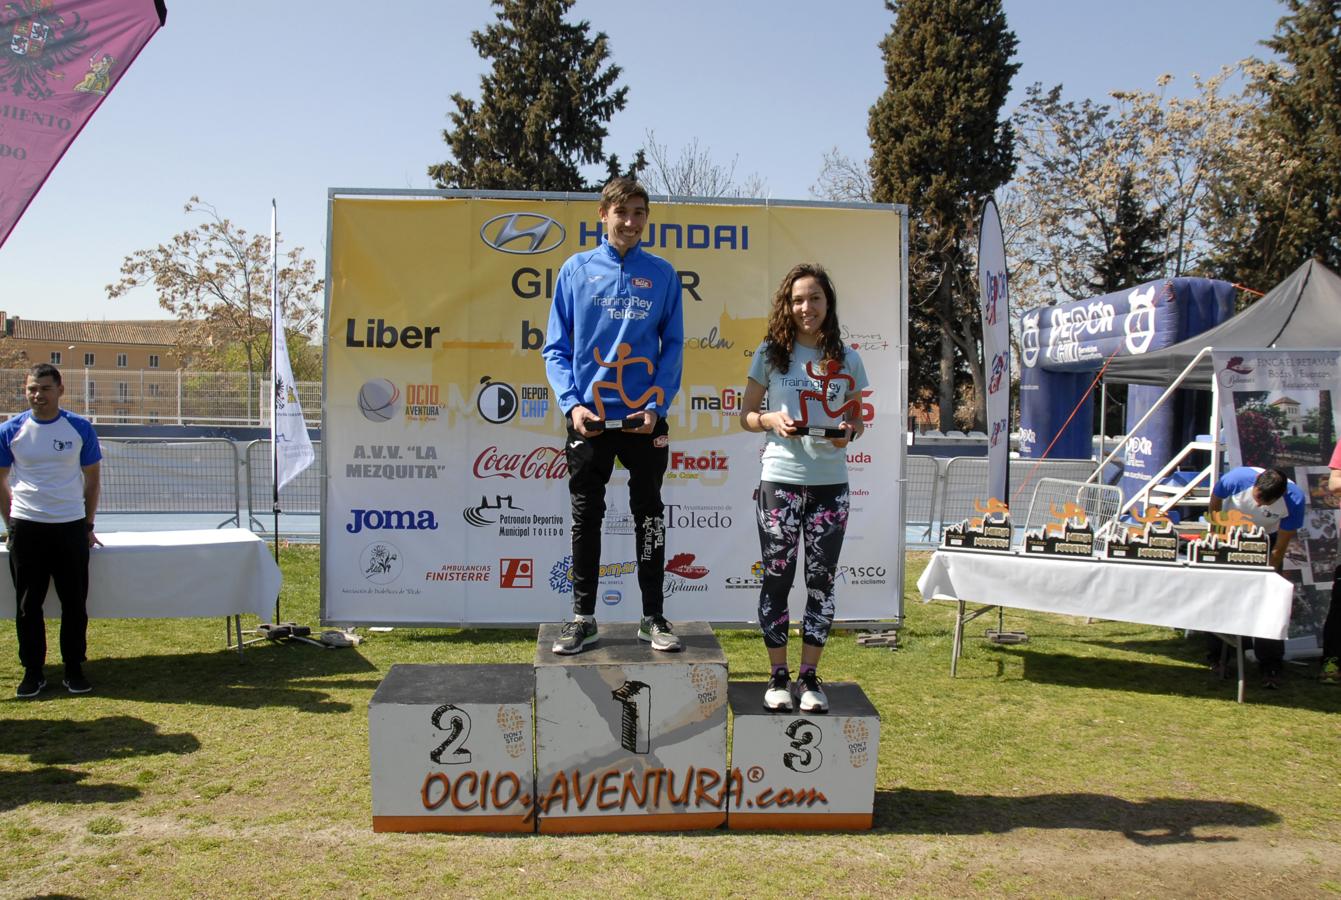 Rafael Martínez-Almeida y Cristina Paloma se alzan con la victoria en la II Media Maratón Toledo